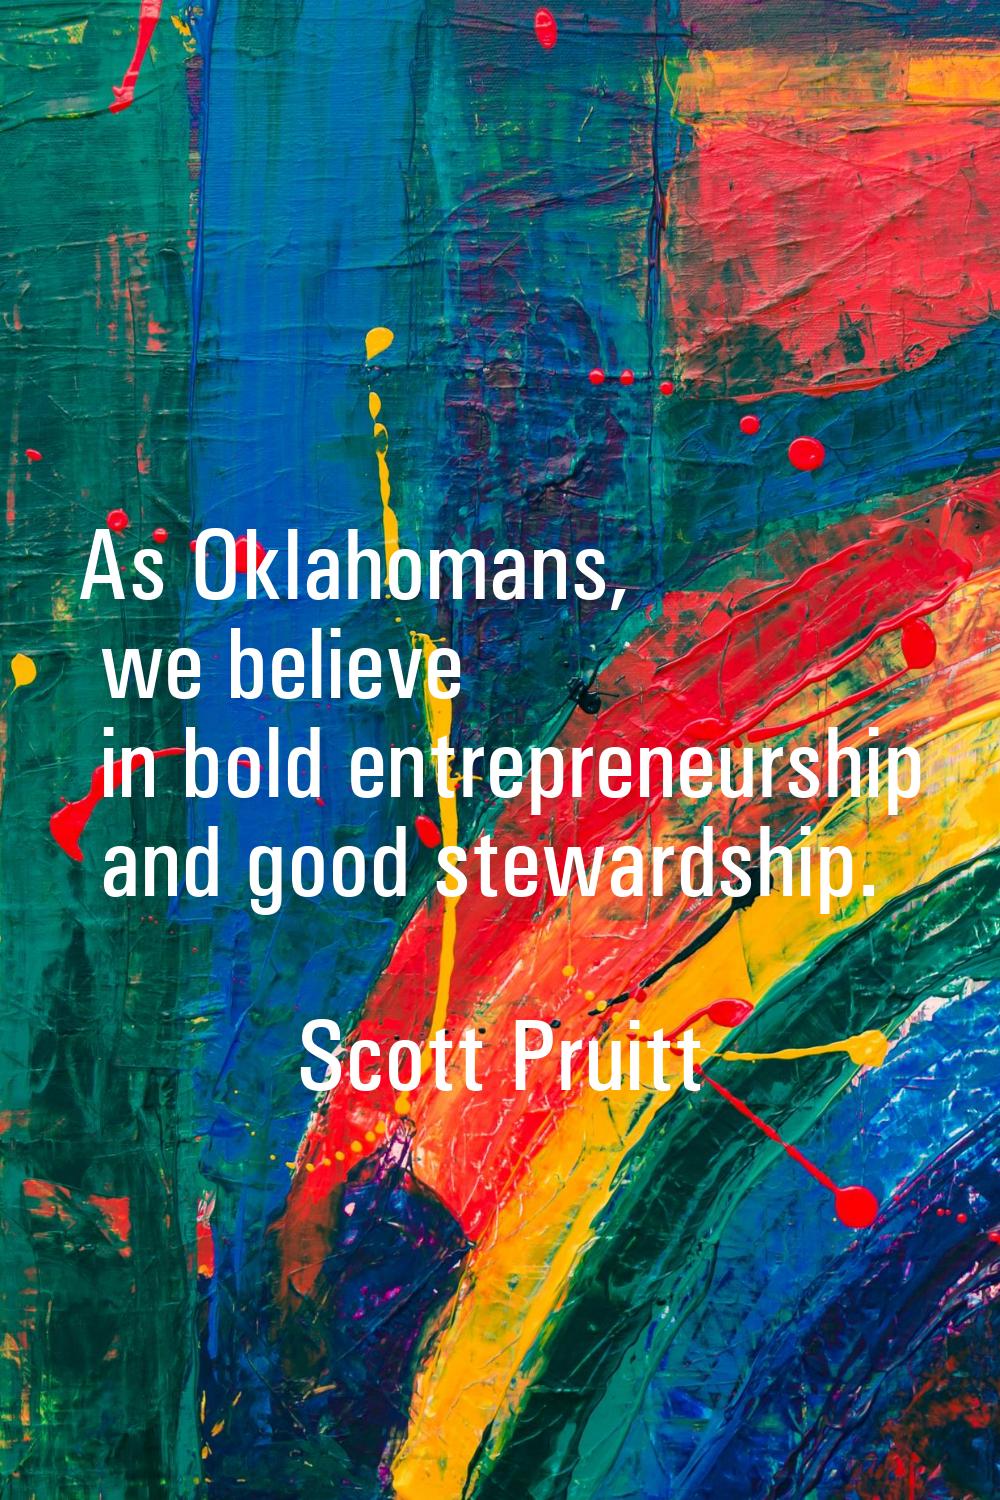 As Oklahomans, we believe in bold entrepreneurship and good stewardship.